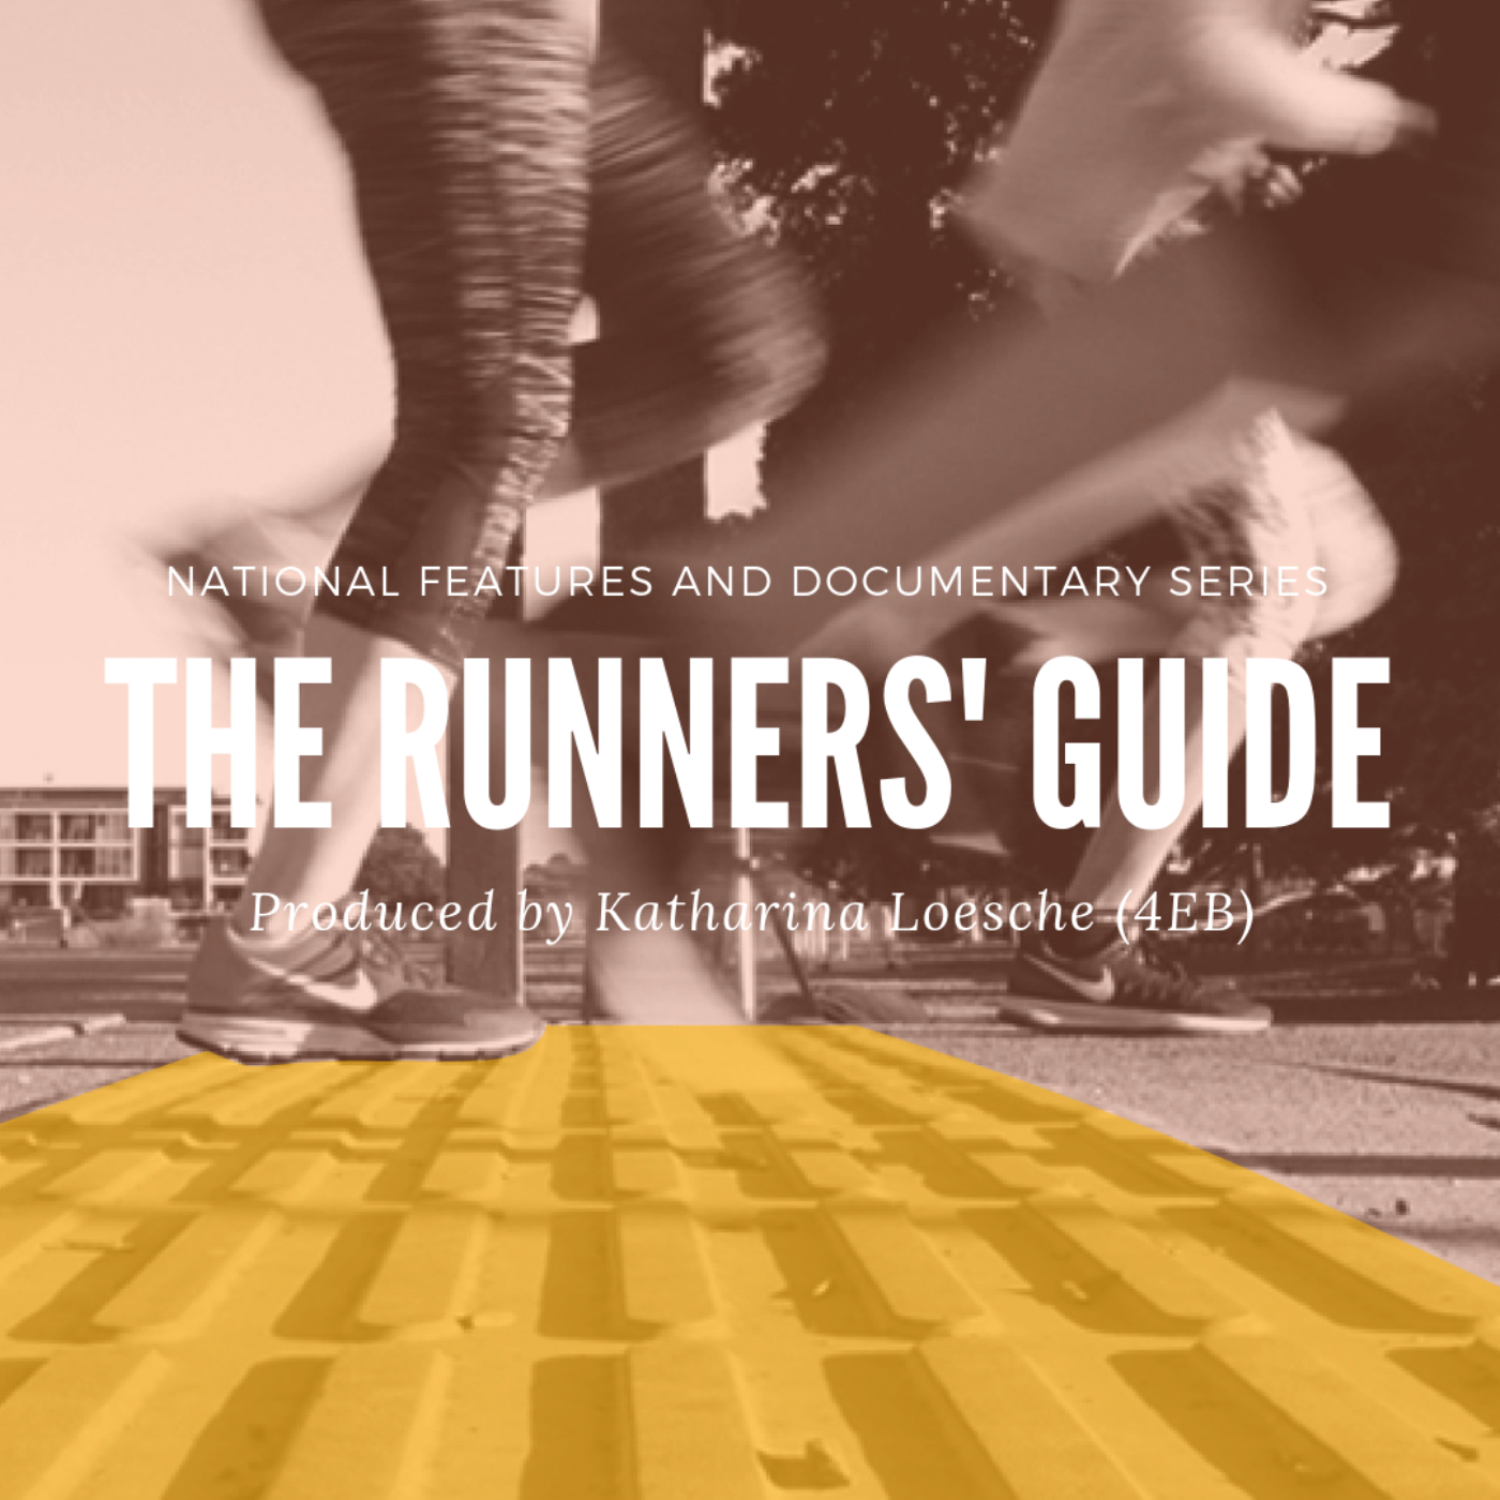 The Runners' Guide (4EB, Brisbane)